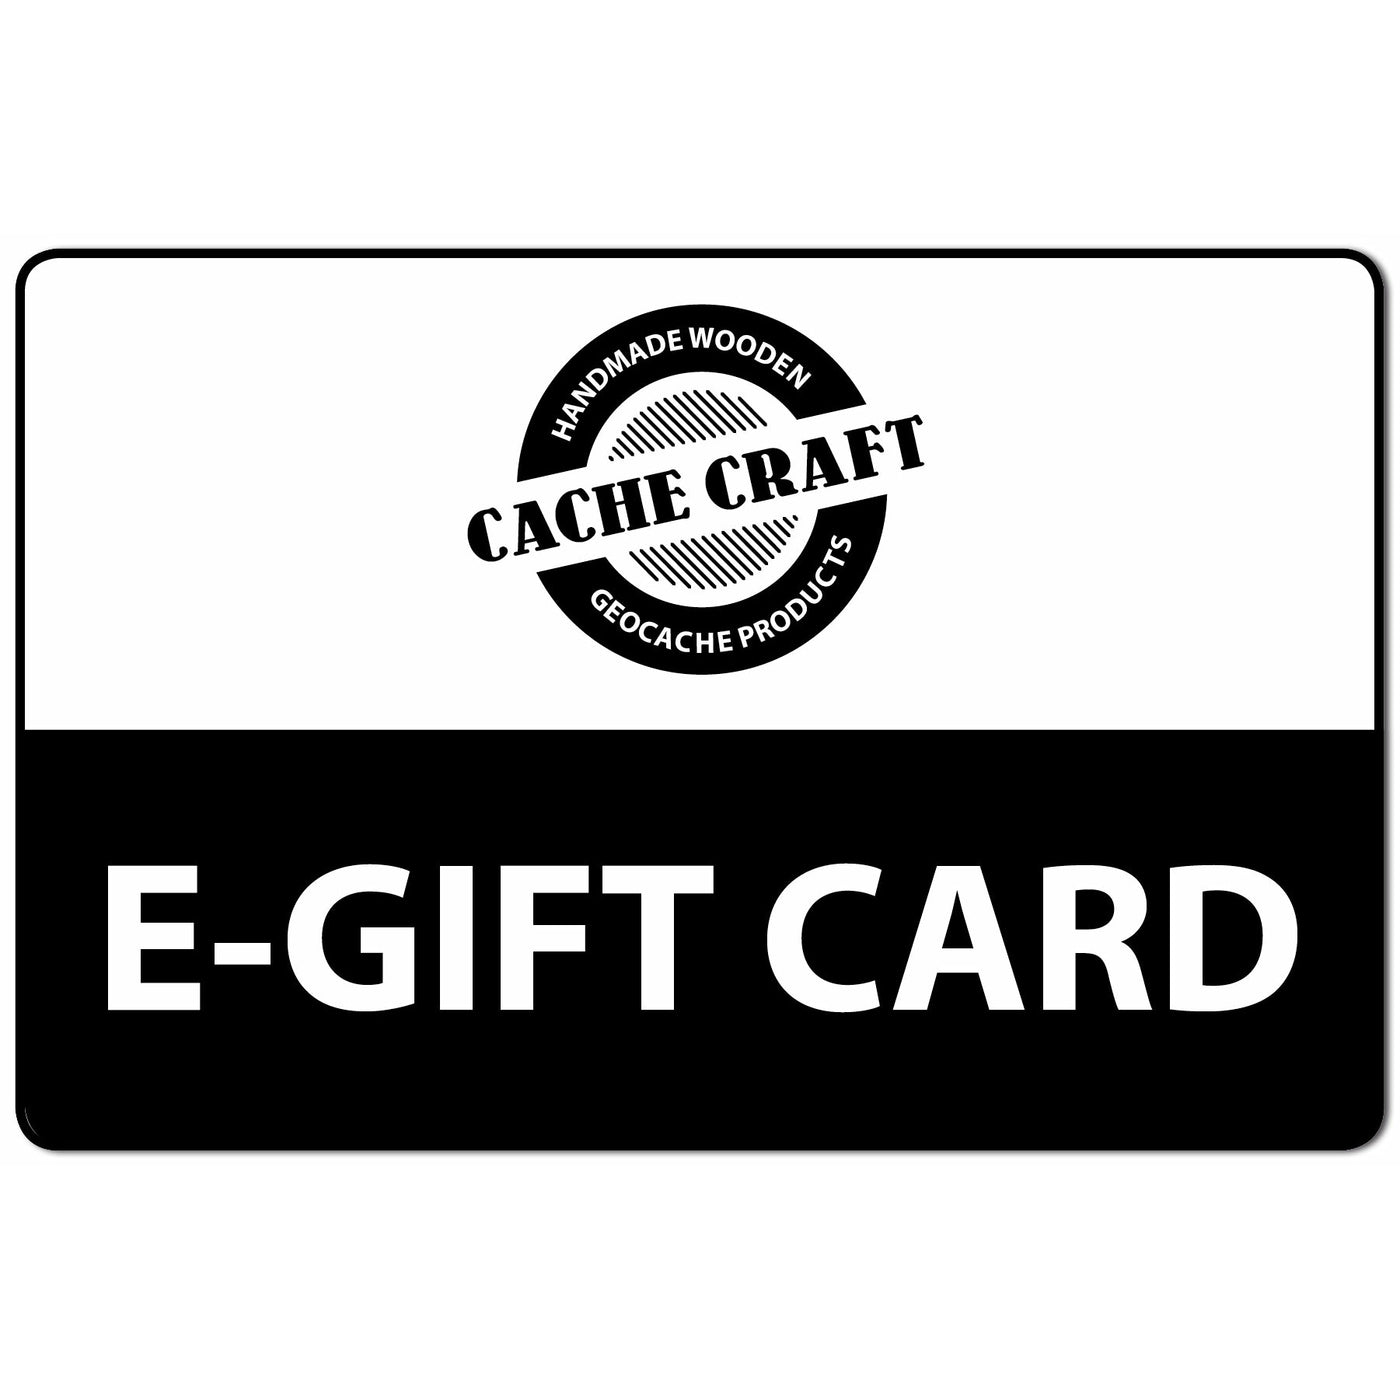 Cache Craft E-Gift Card